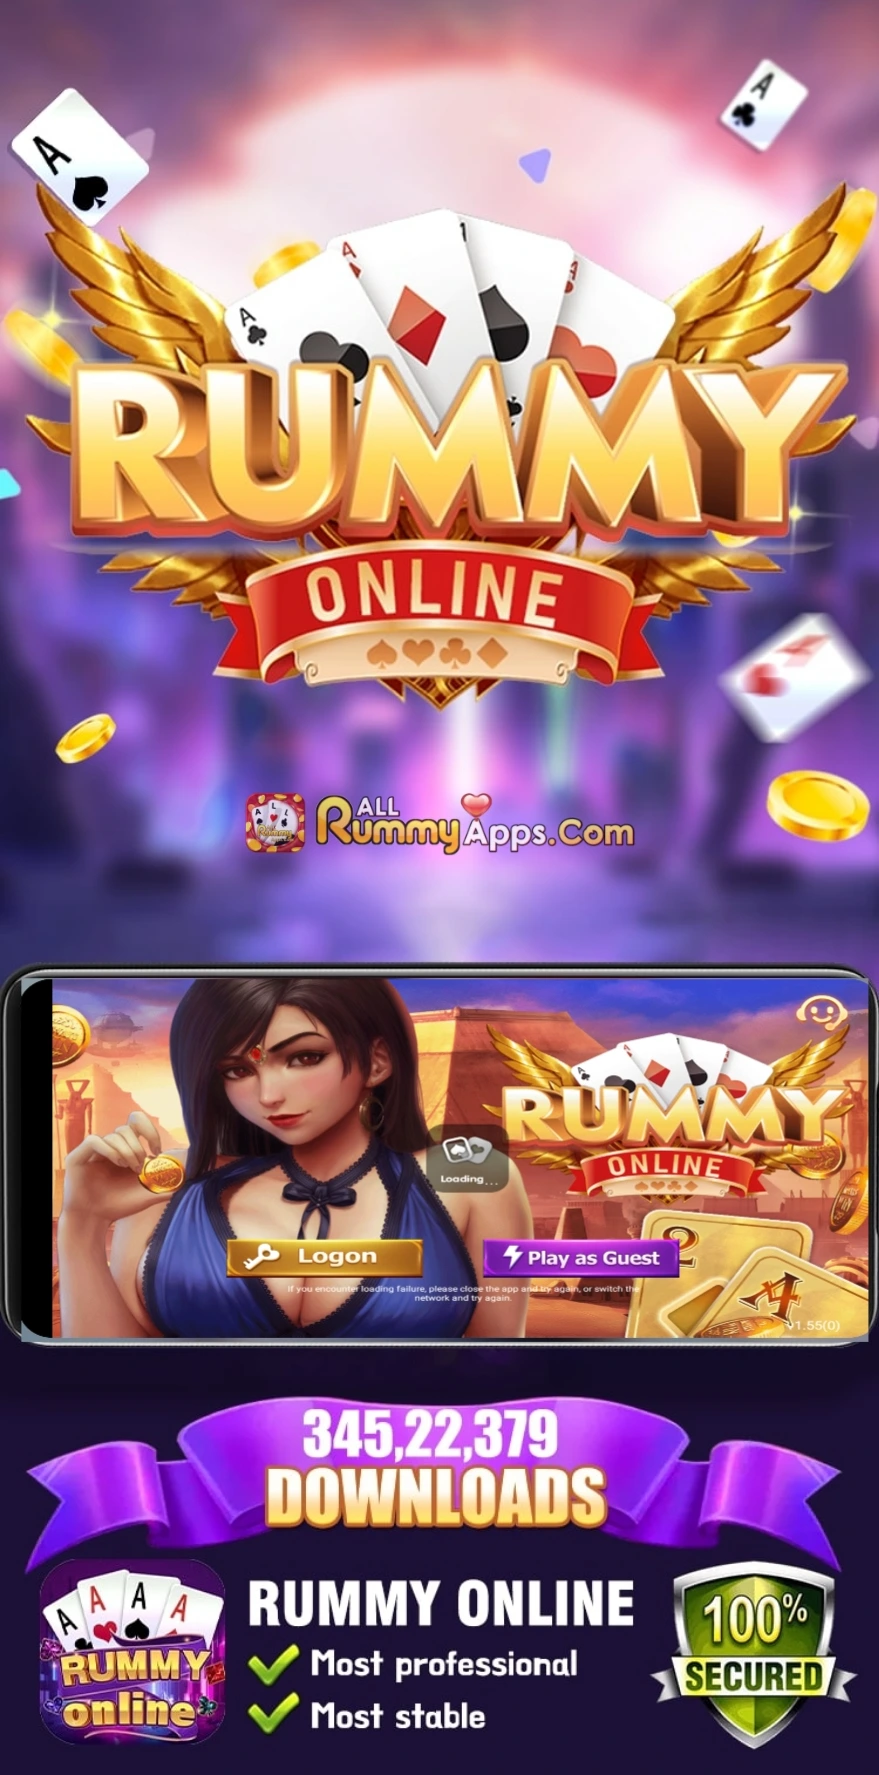 Rummy Online - All Rummy App List